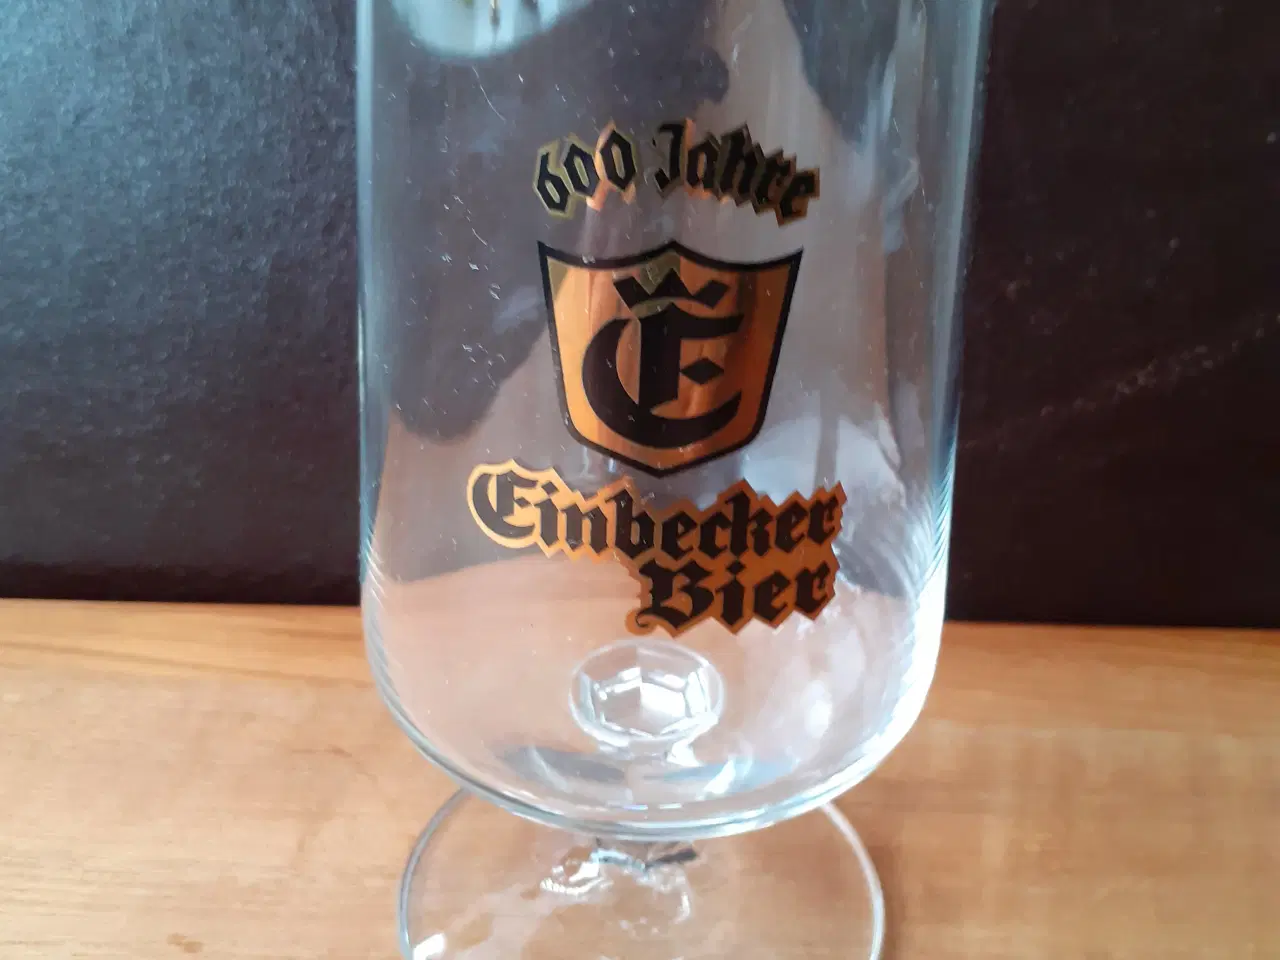 Billede 1 - 600 Jahre Einbecker Bier - ølglas fra 1978